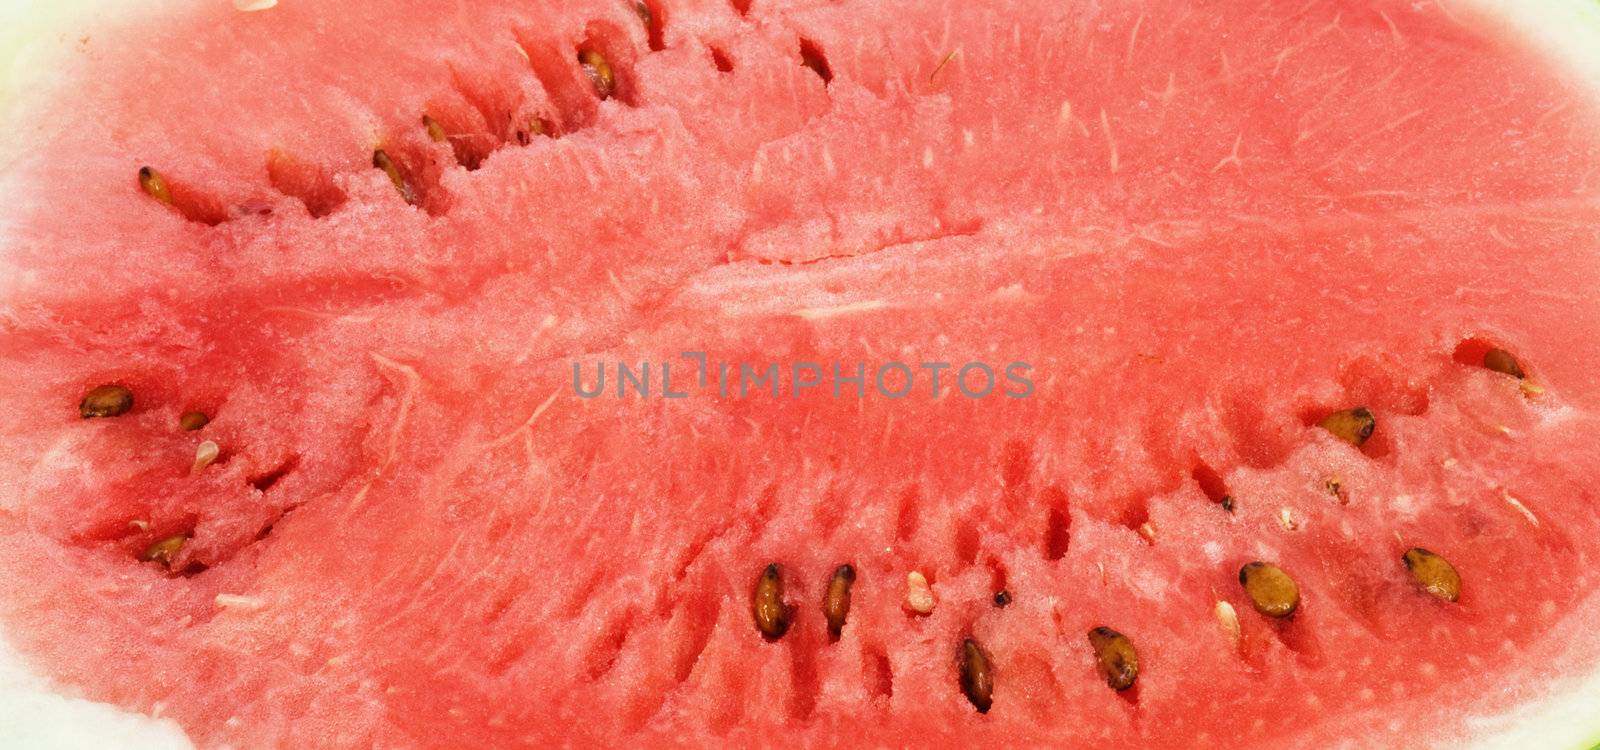 watermelon as background by schankz